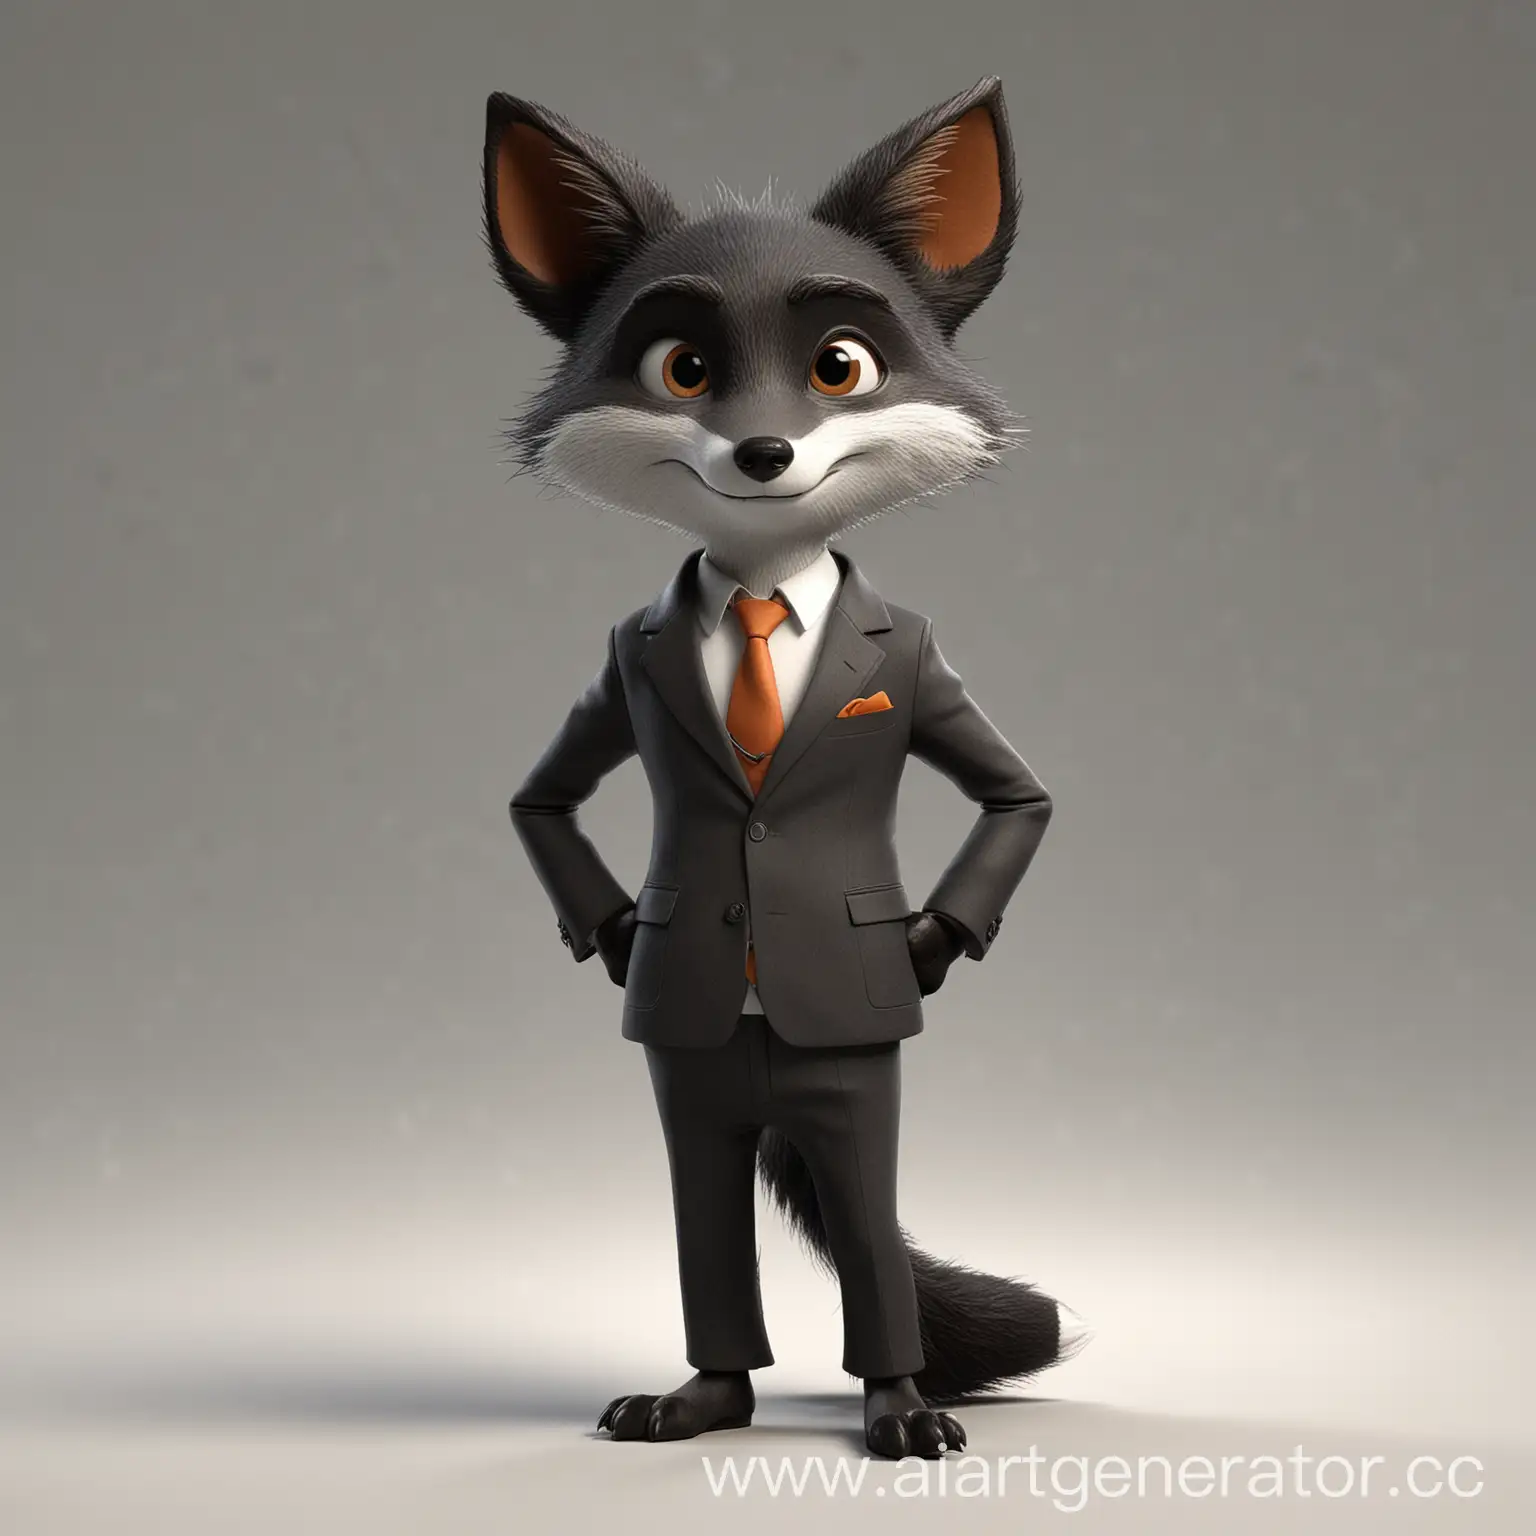 Black-Fox-Business-Suit-3D-Character-Professional-Animal-Cartoon-Illustration